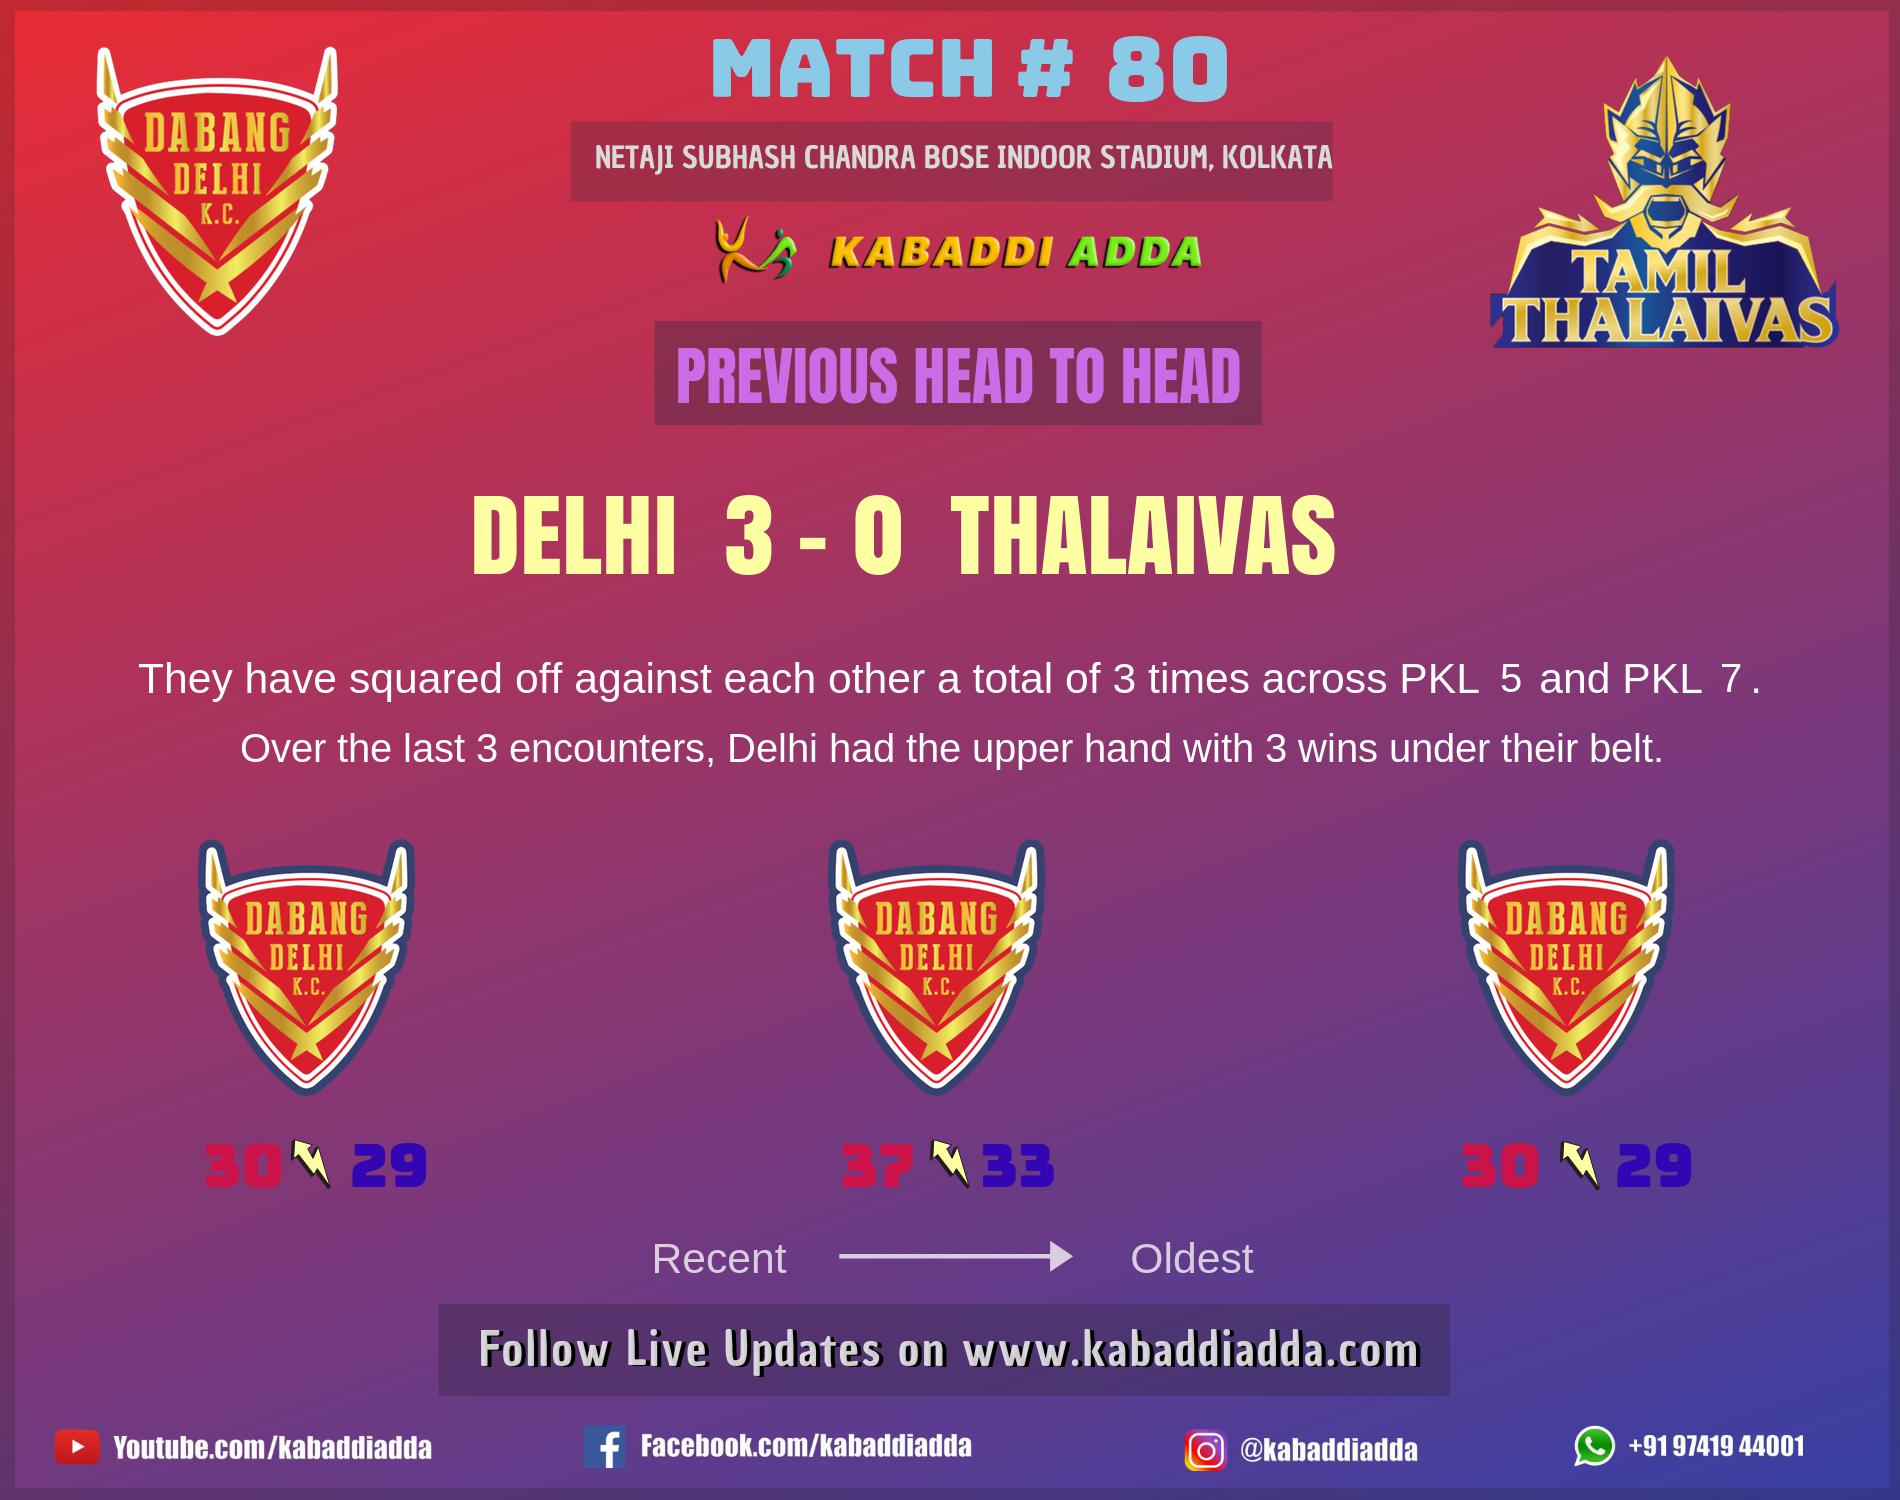 Dabang Delhi is playing against Tamil Thalaivas